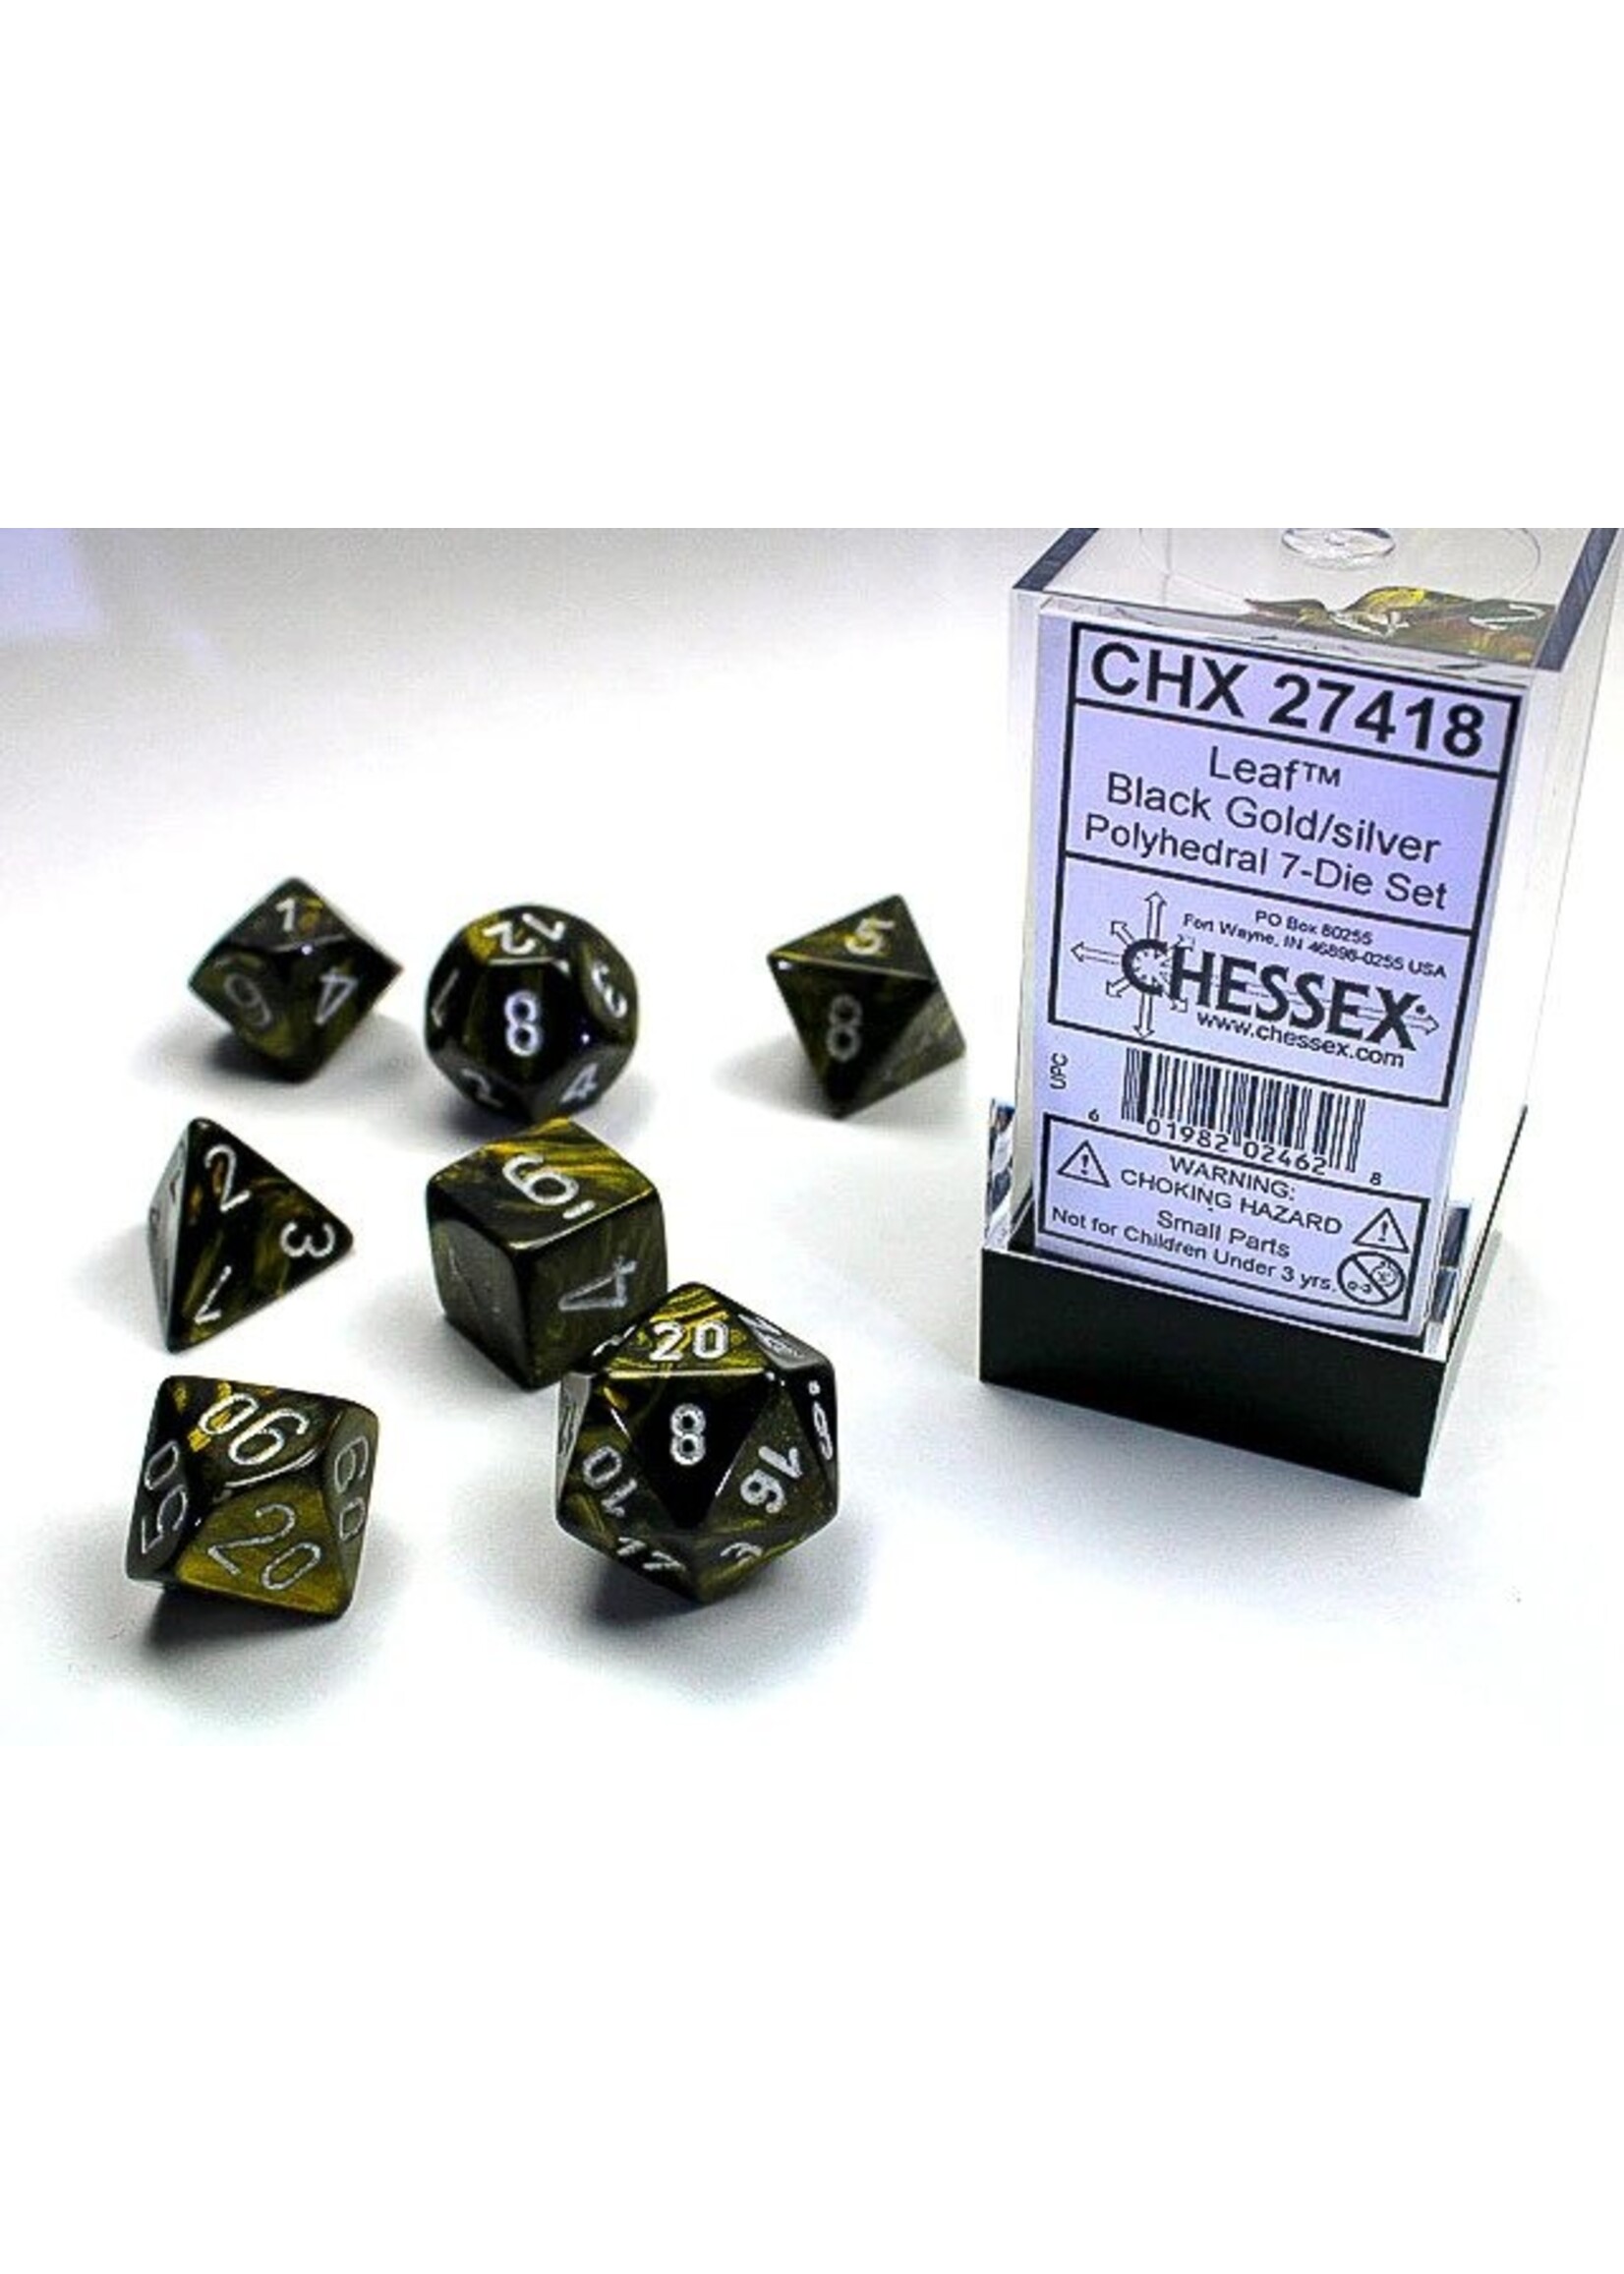 Chessex LEAF 7die black-gold/silver